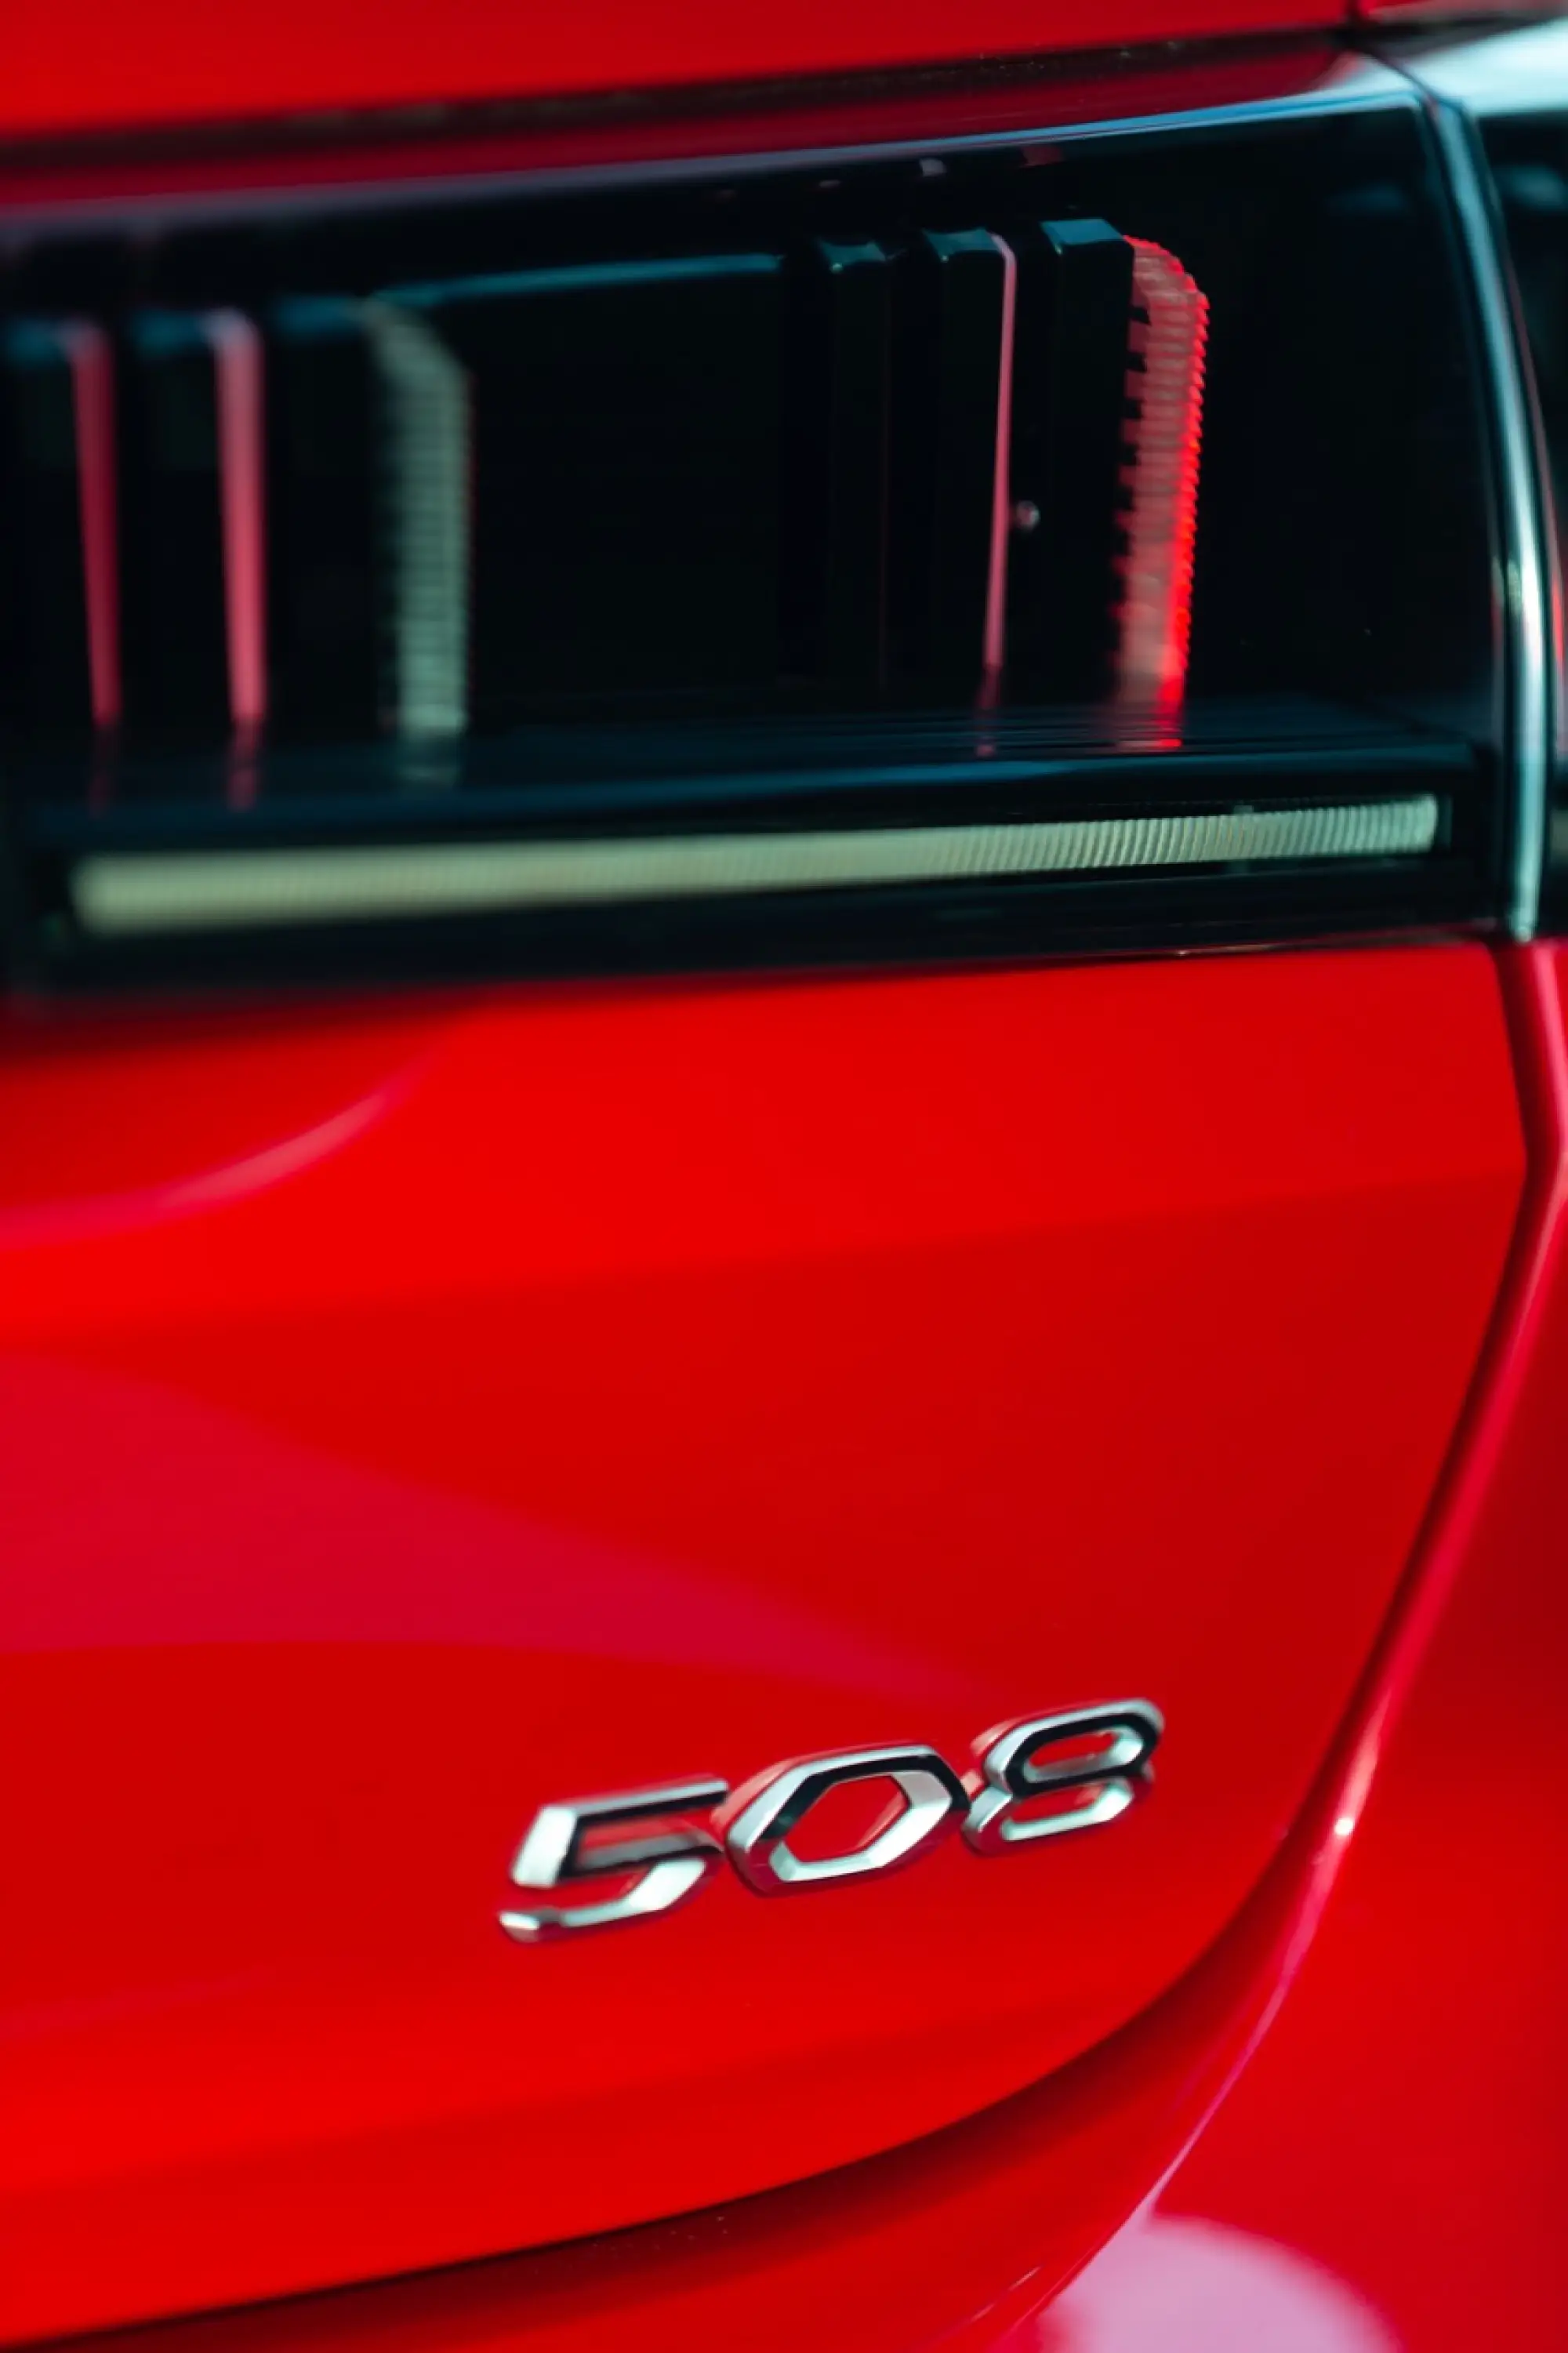 Peugeot 508 - Test drive 2018 - 152